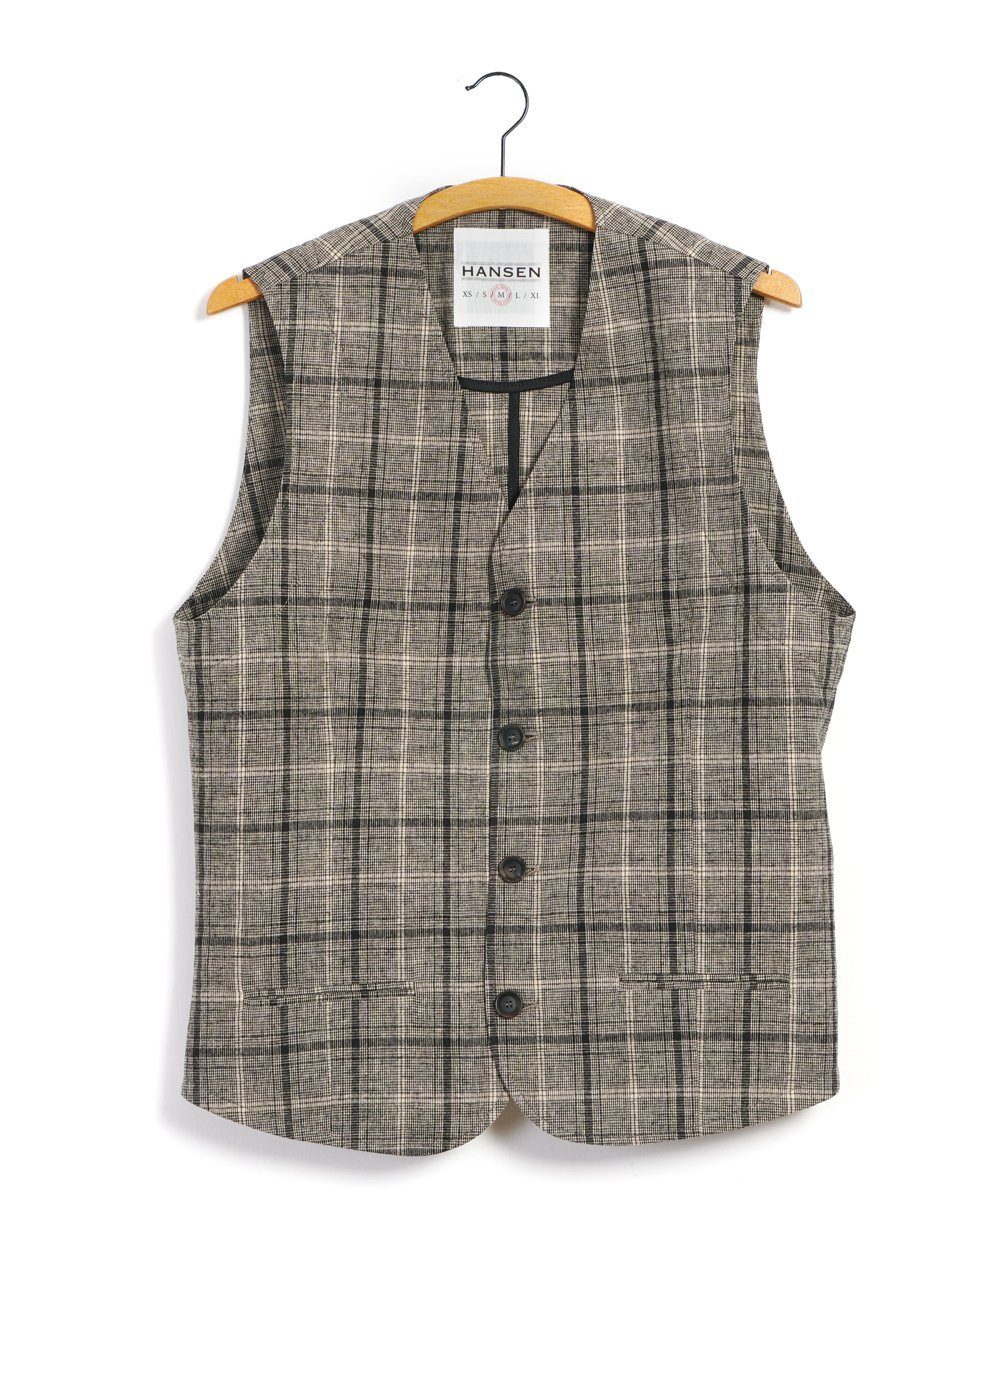 HANSEN GARMENTS - DANIEL | Four Button Waistcoat | Check 1 - HANSEN Garments